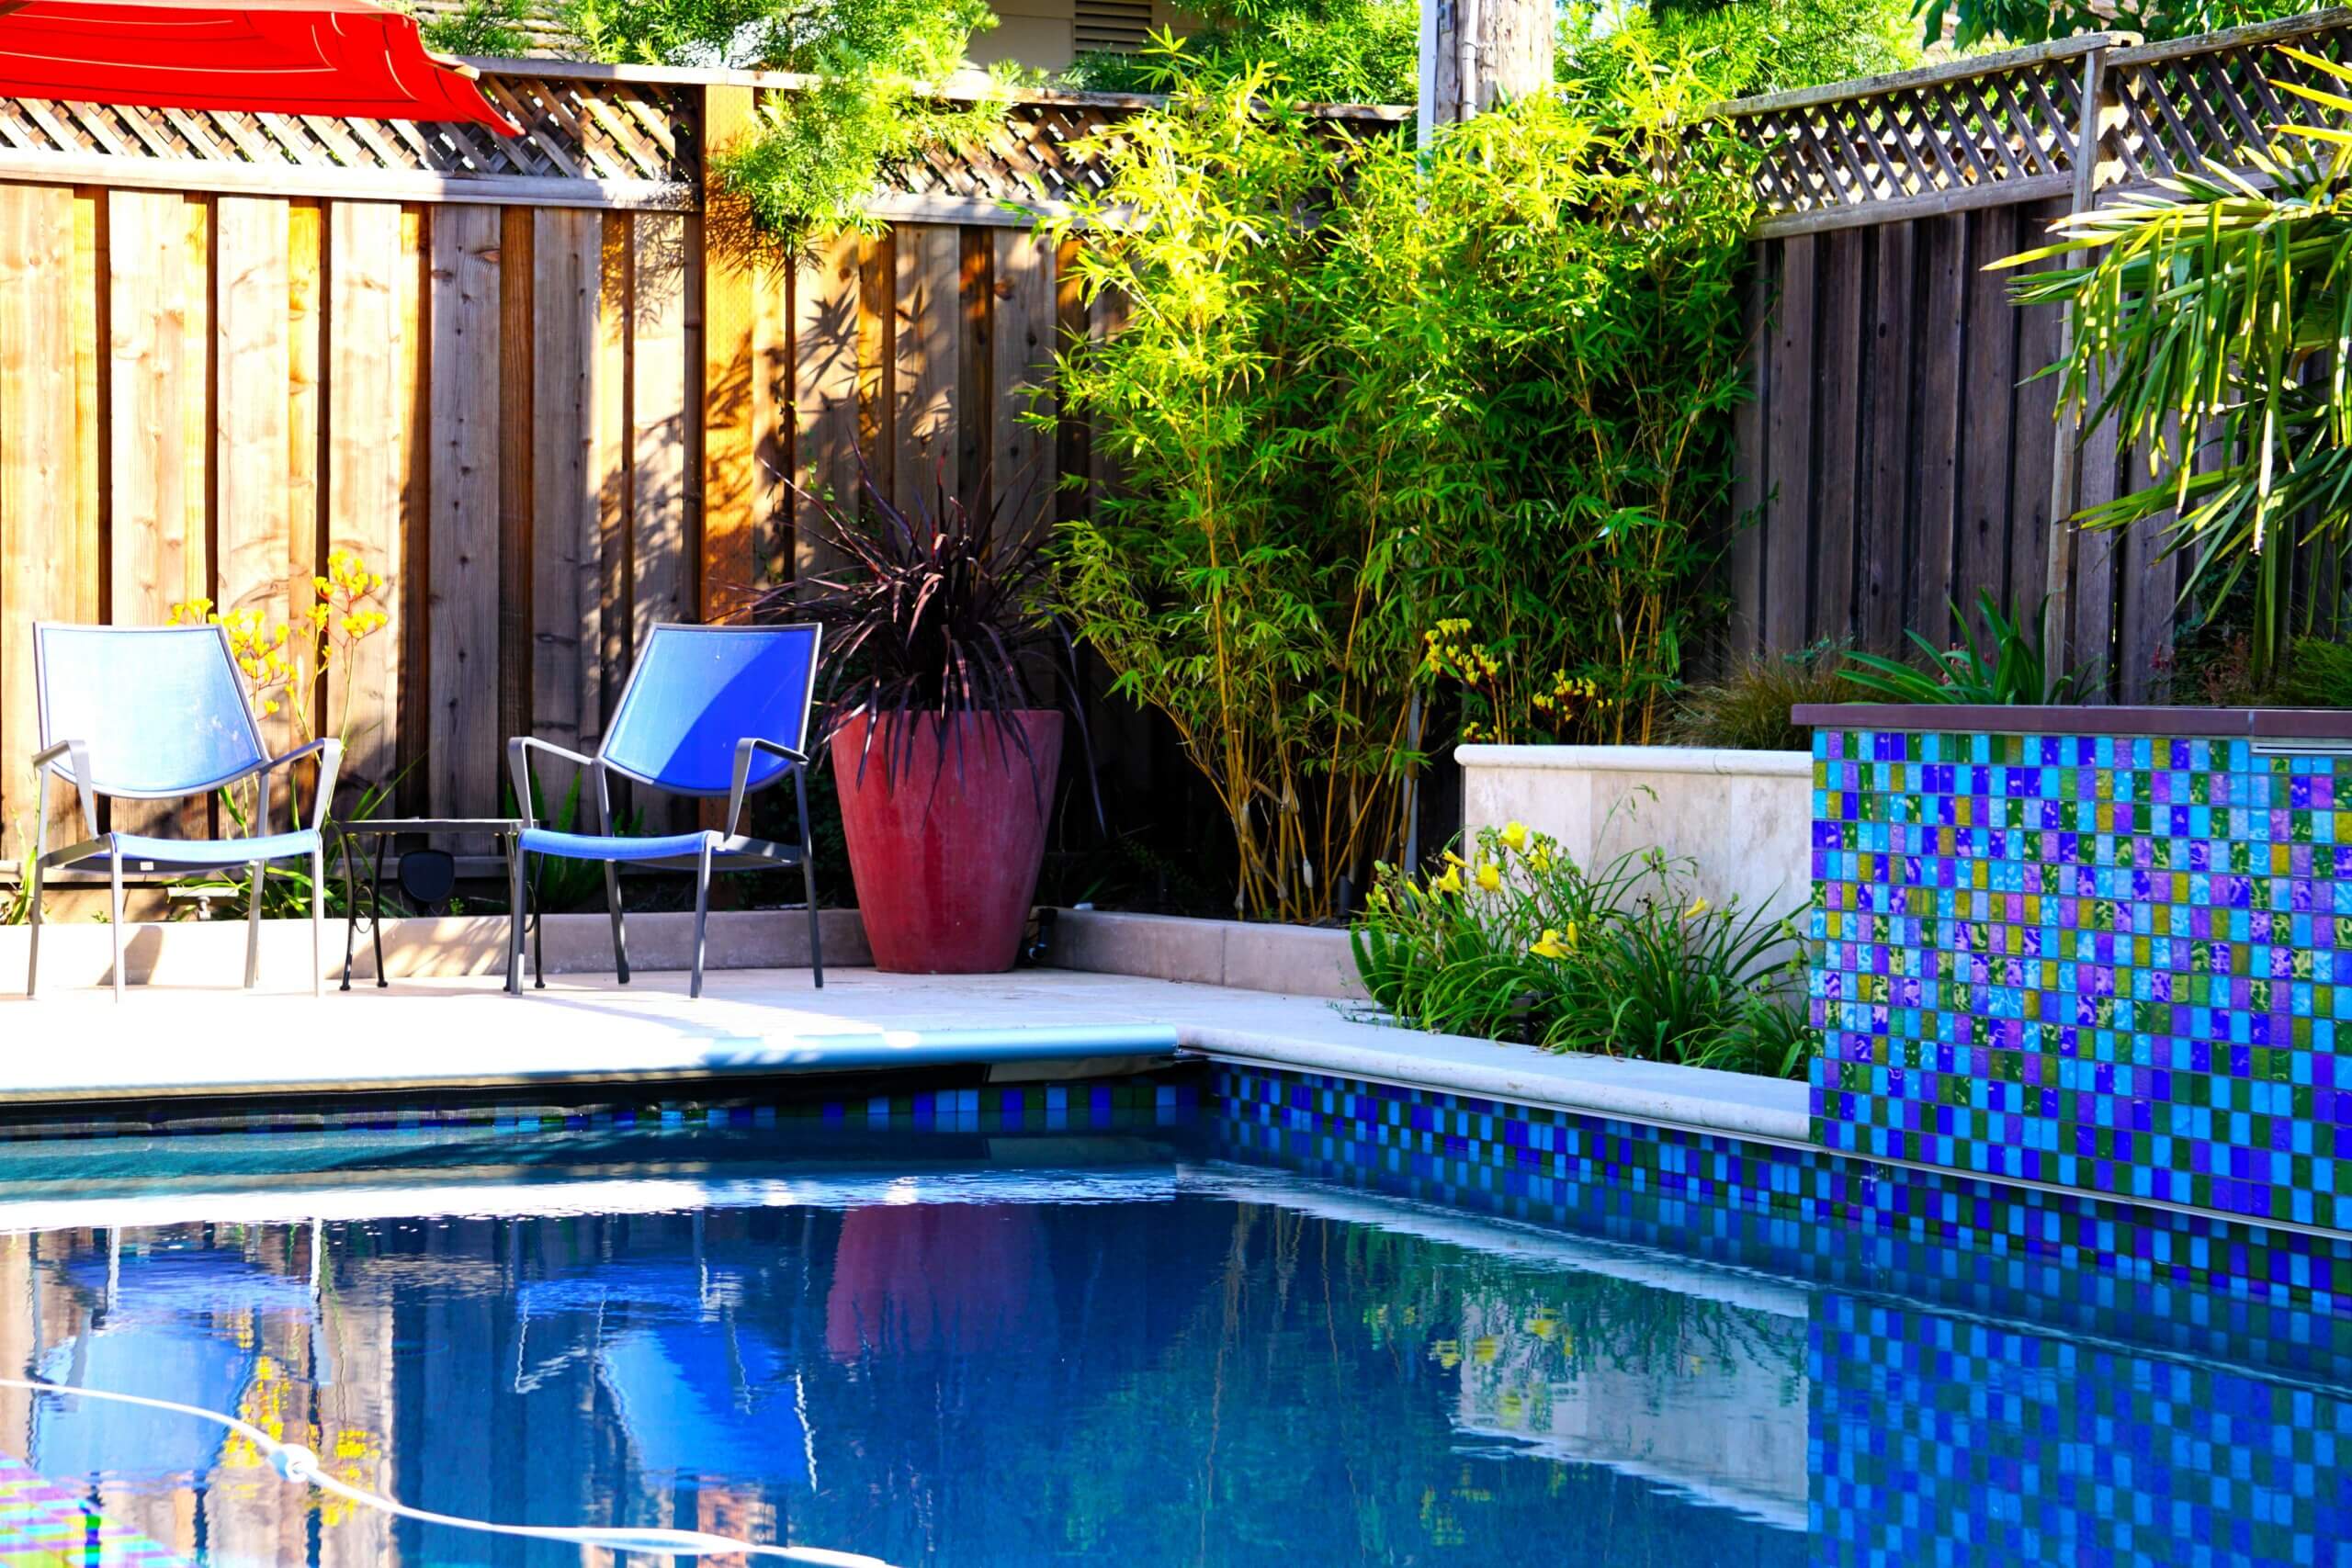 Gorgeous custom blue tile swimming pool in lush California oasis backyard